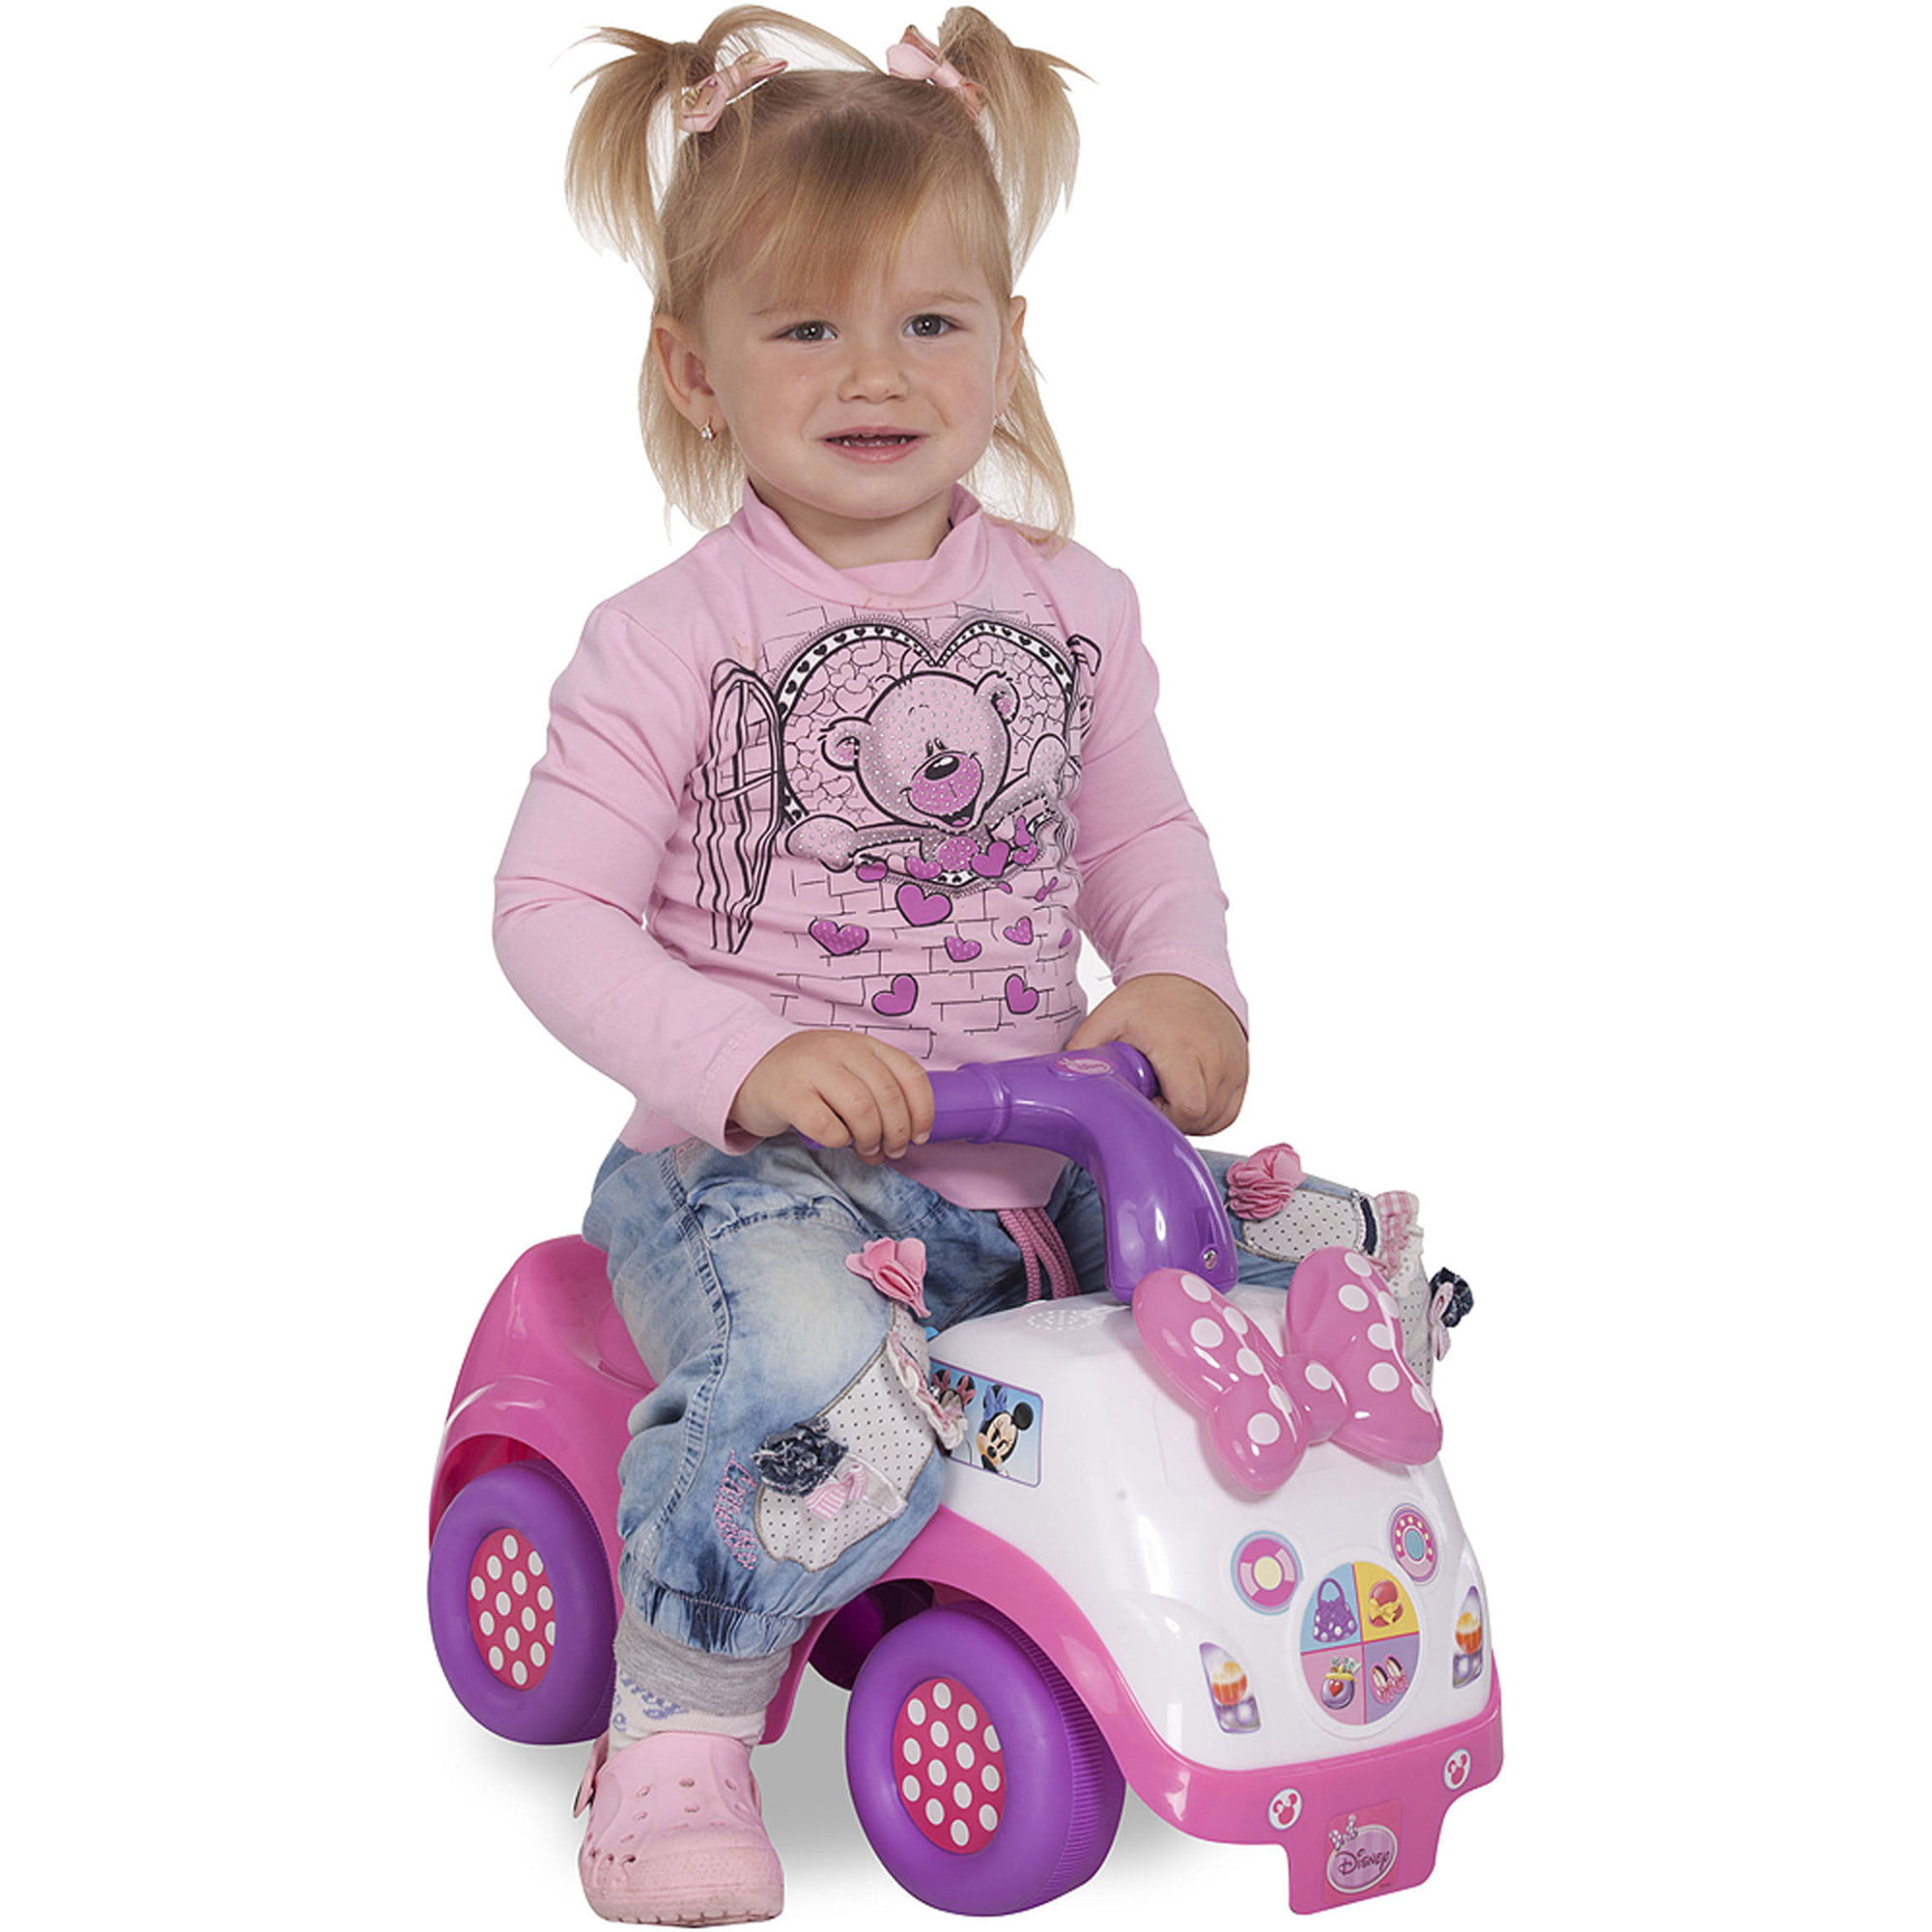 Baby Ride-on Toys - Walmart.com